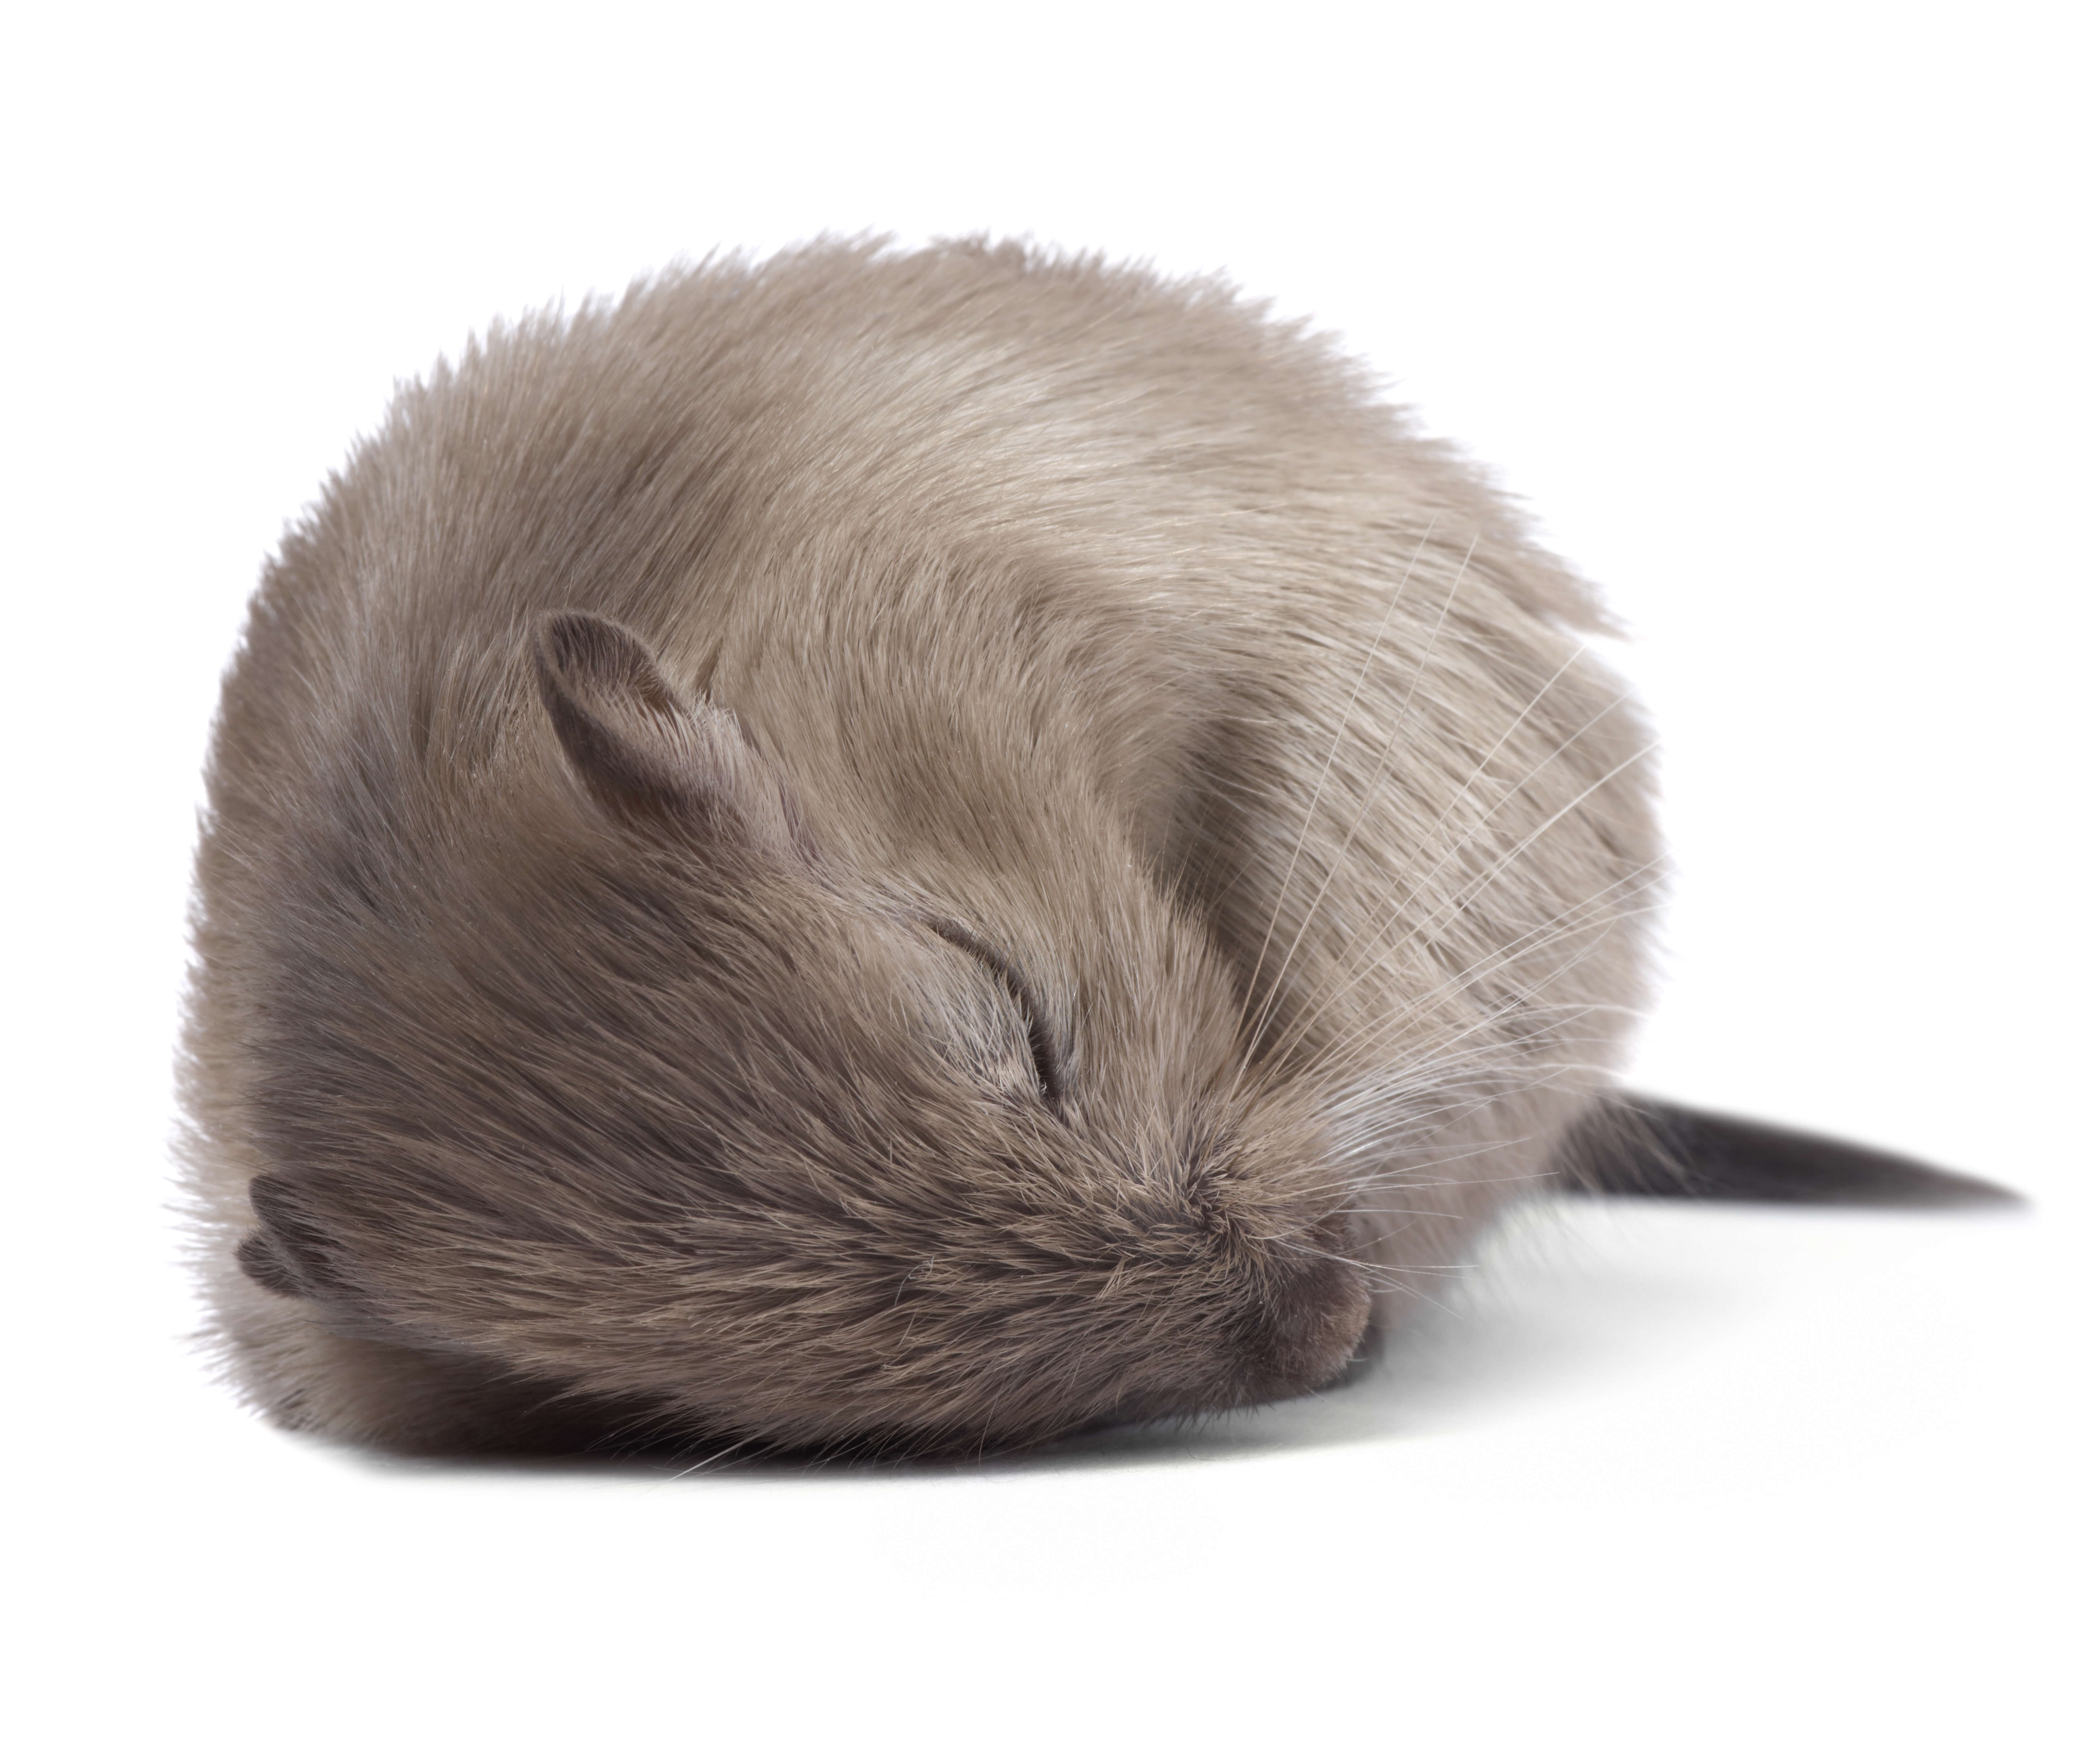 sleeping mouse